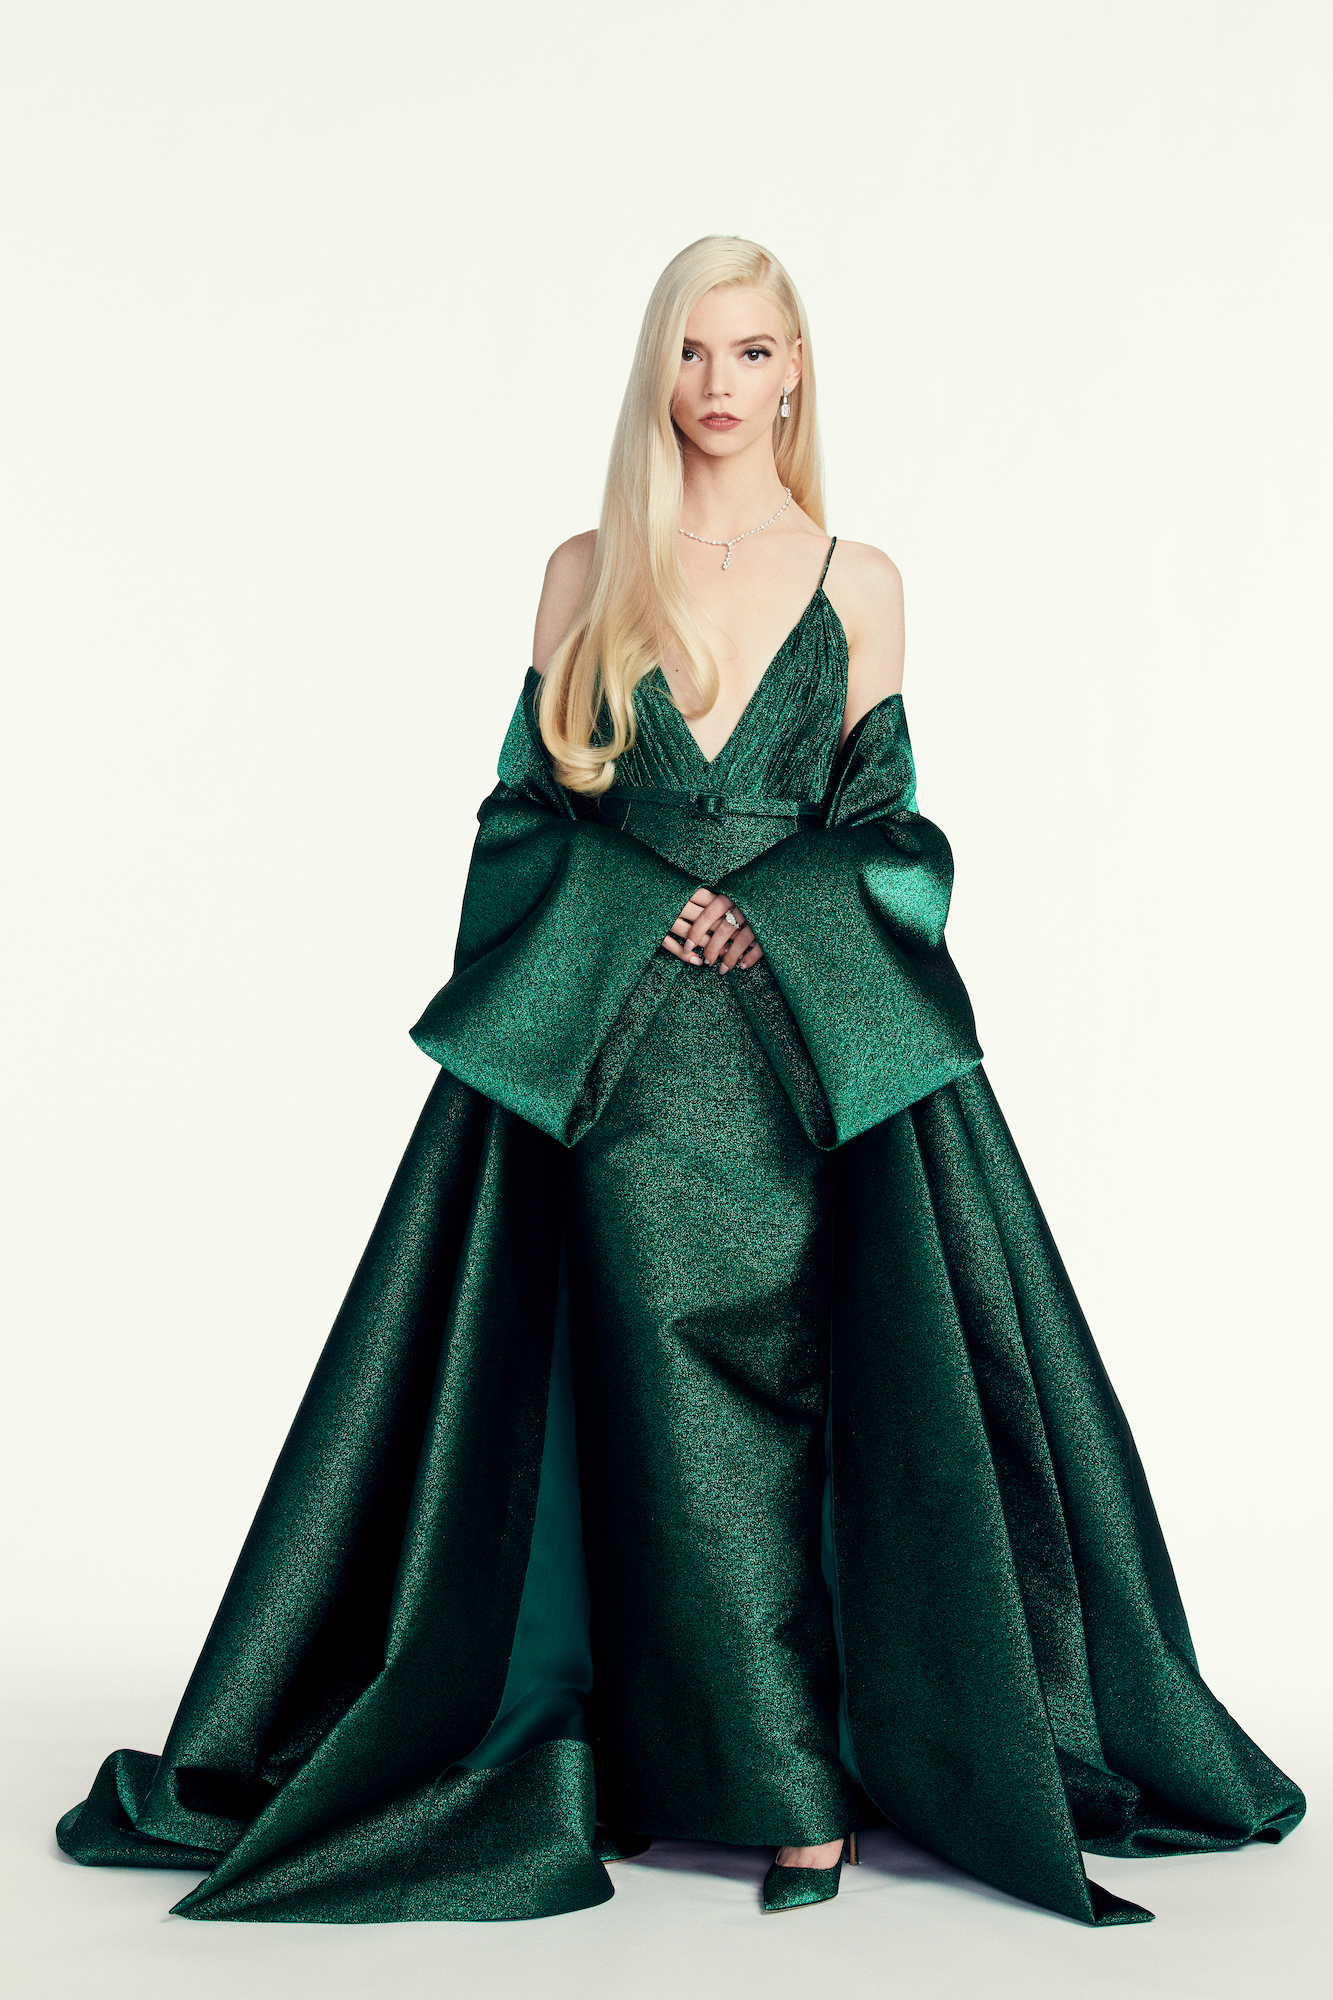 Anya Taylor-Joy, her Golden Globe and green Dior dress